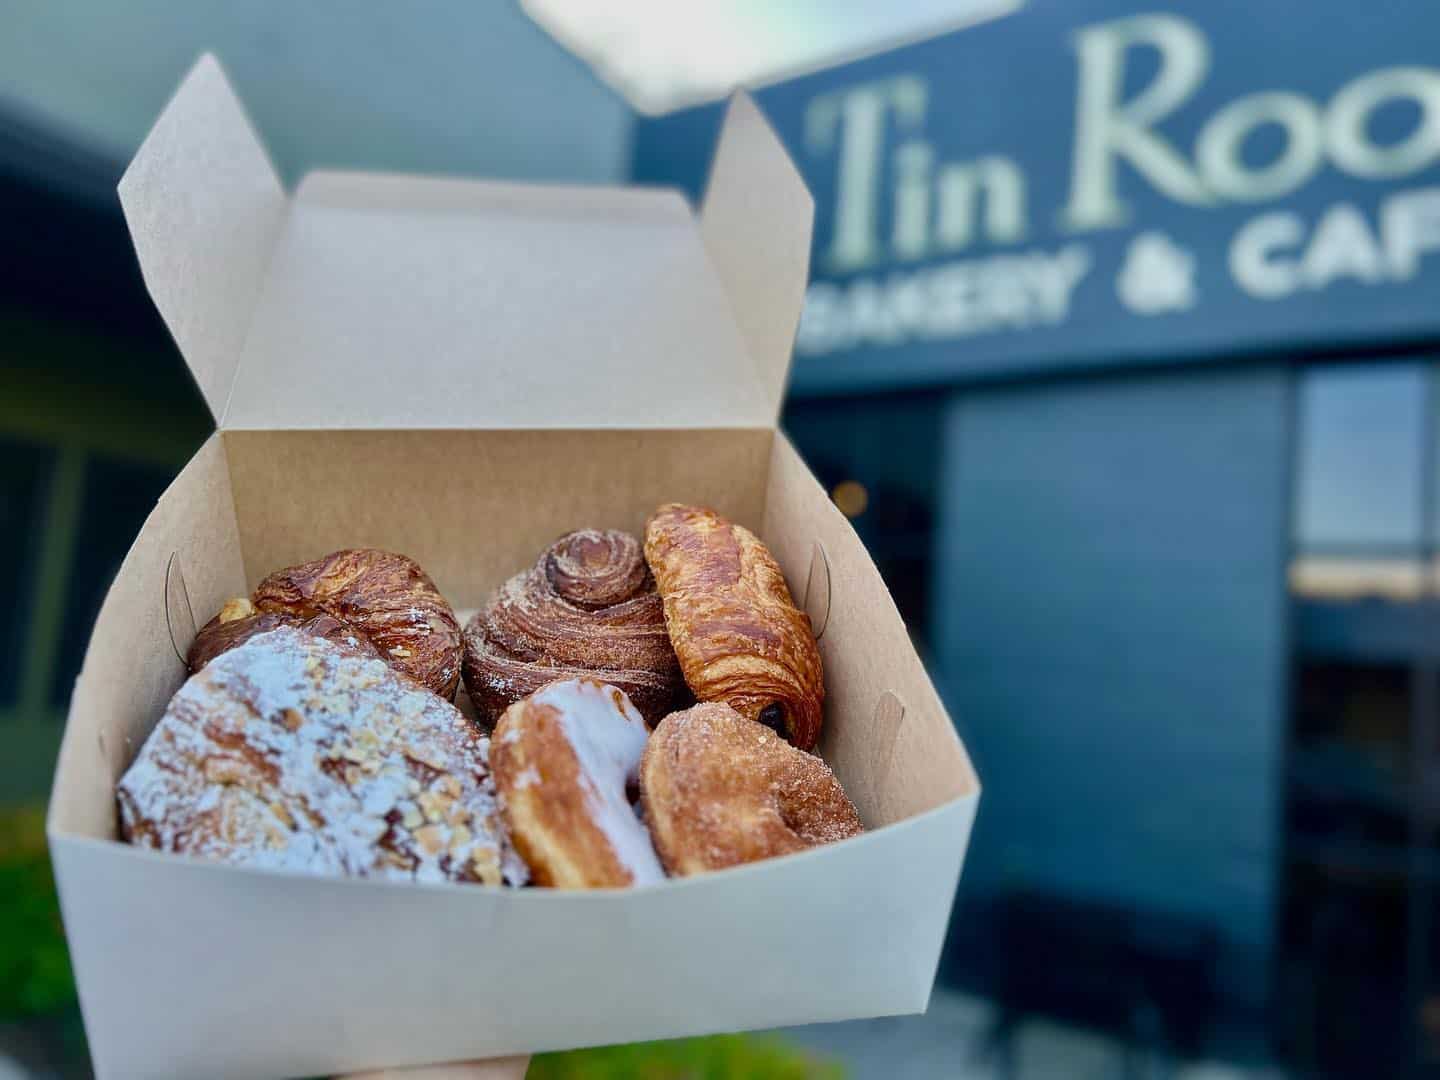 Tin Roof Bakery & Cafe